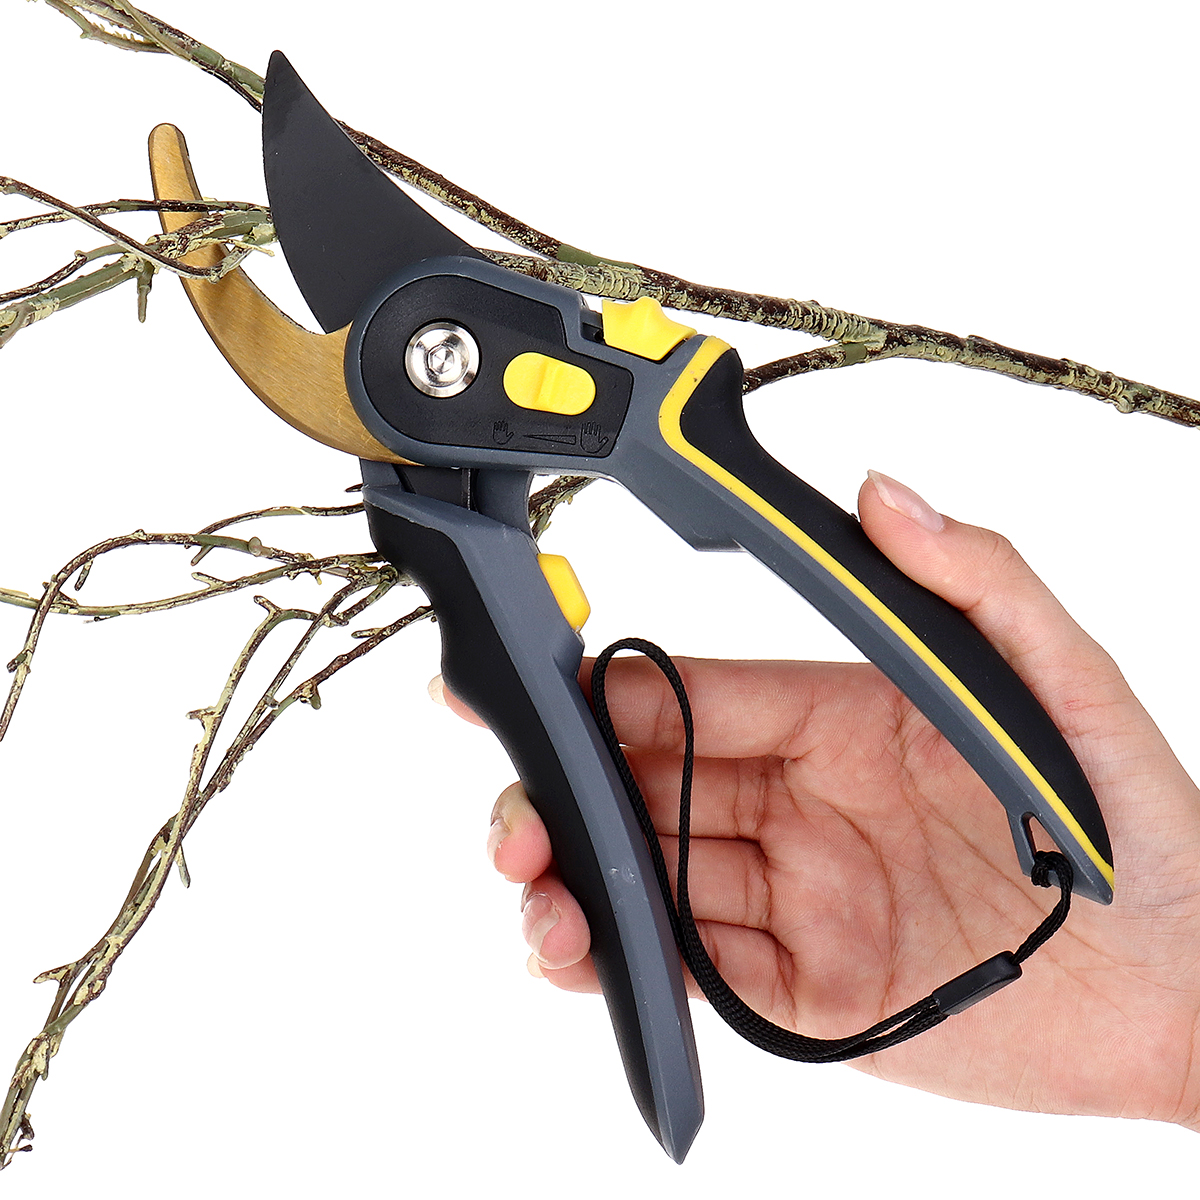 Pruning-Shear-Cutter-Garden-Tools-Labor-Saving-Steel-Scissors-Gardening-Plant-Branch-1693433-10